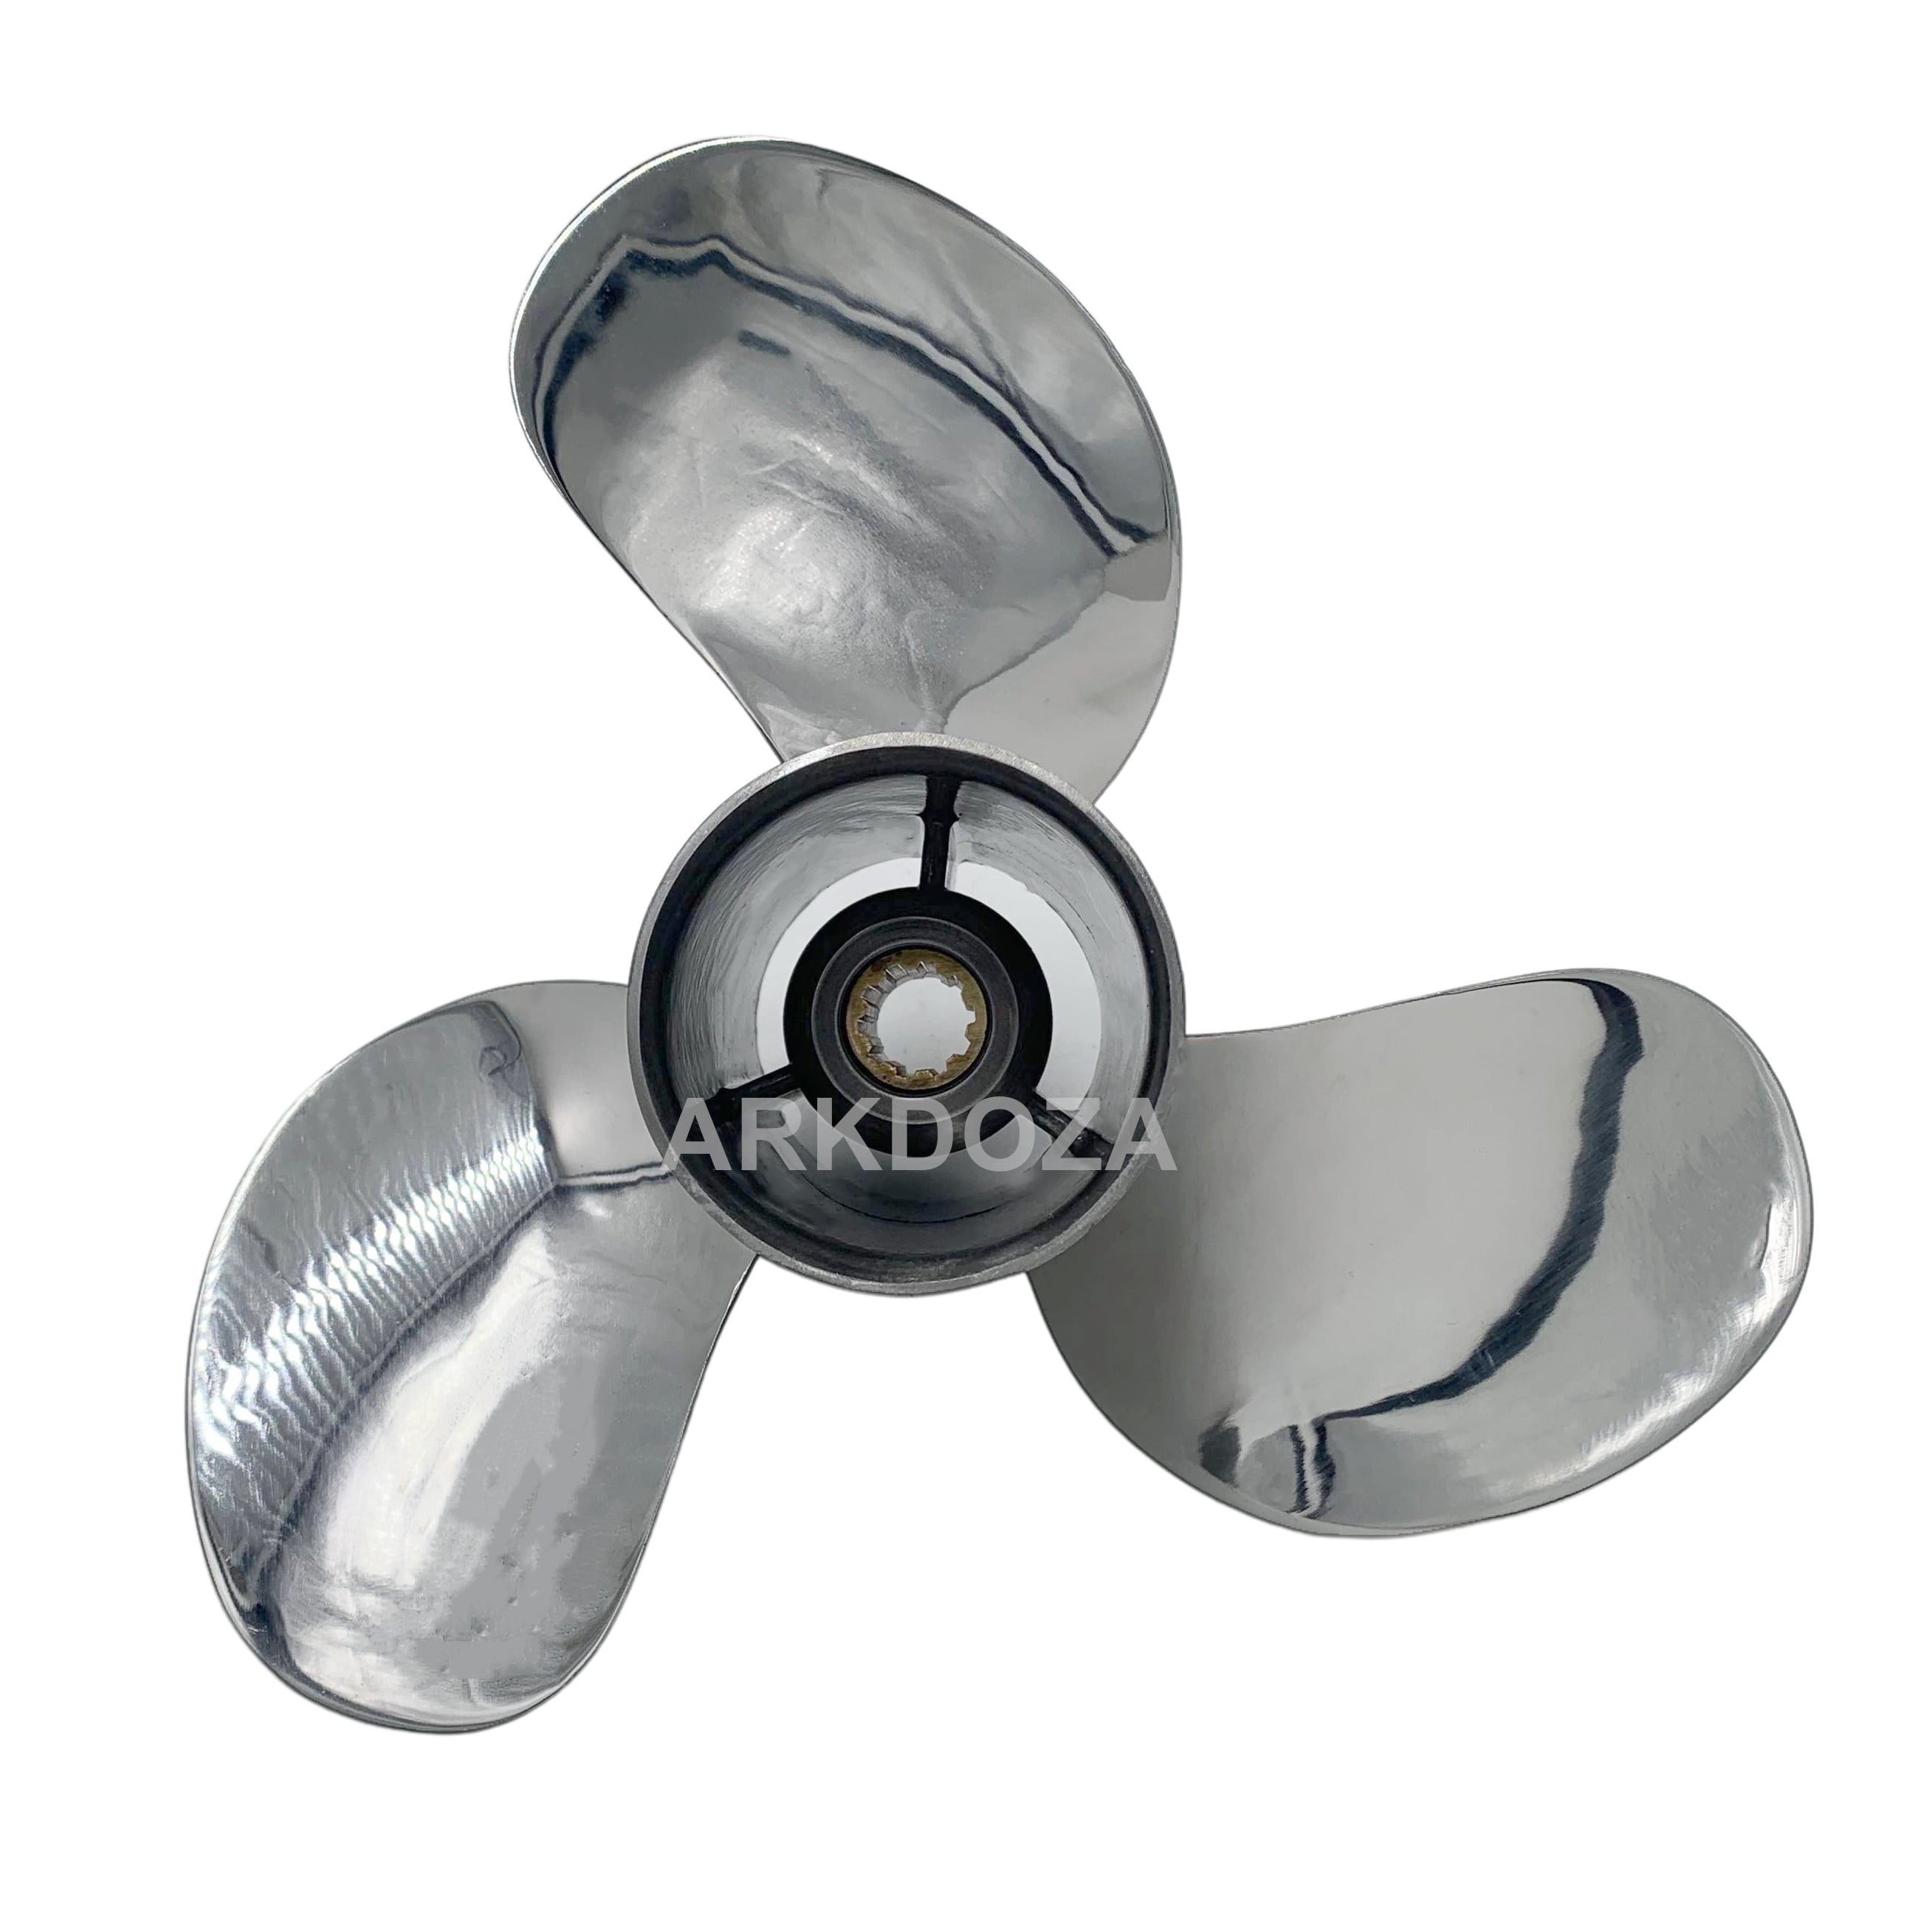 ARKDOZA Propeller 9 7/8x10 1/2 for Yamaha Outboard 25-30HP